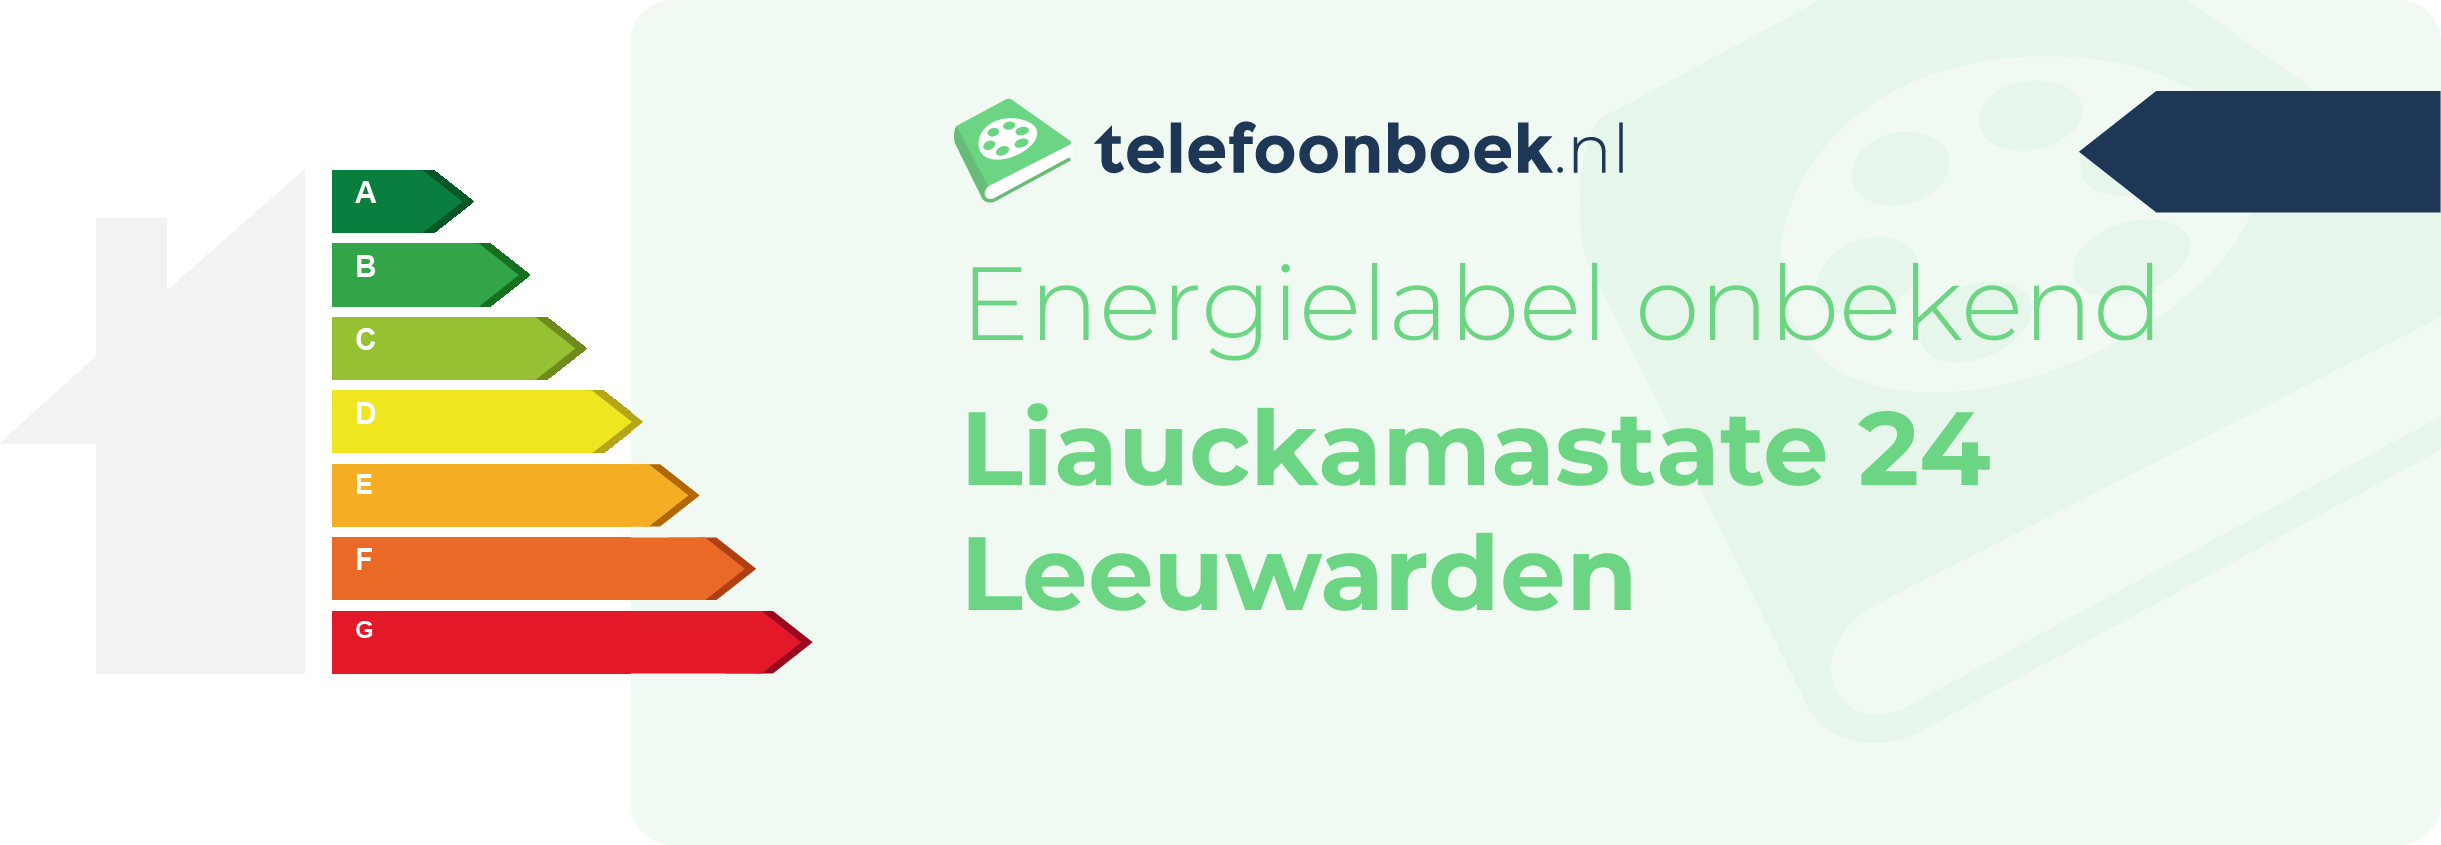 Energielabel Liauckamastate 24 Leeuwarden